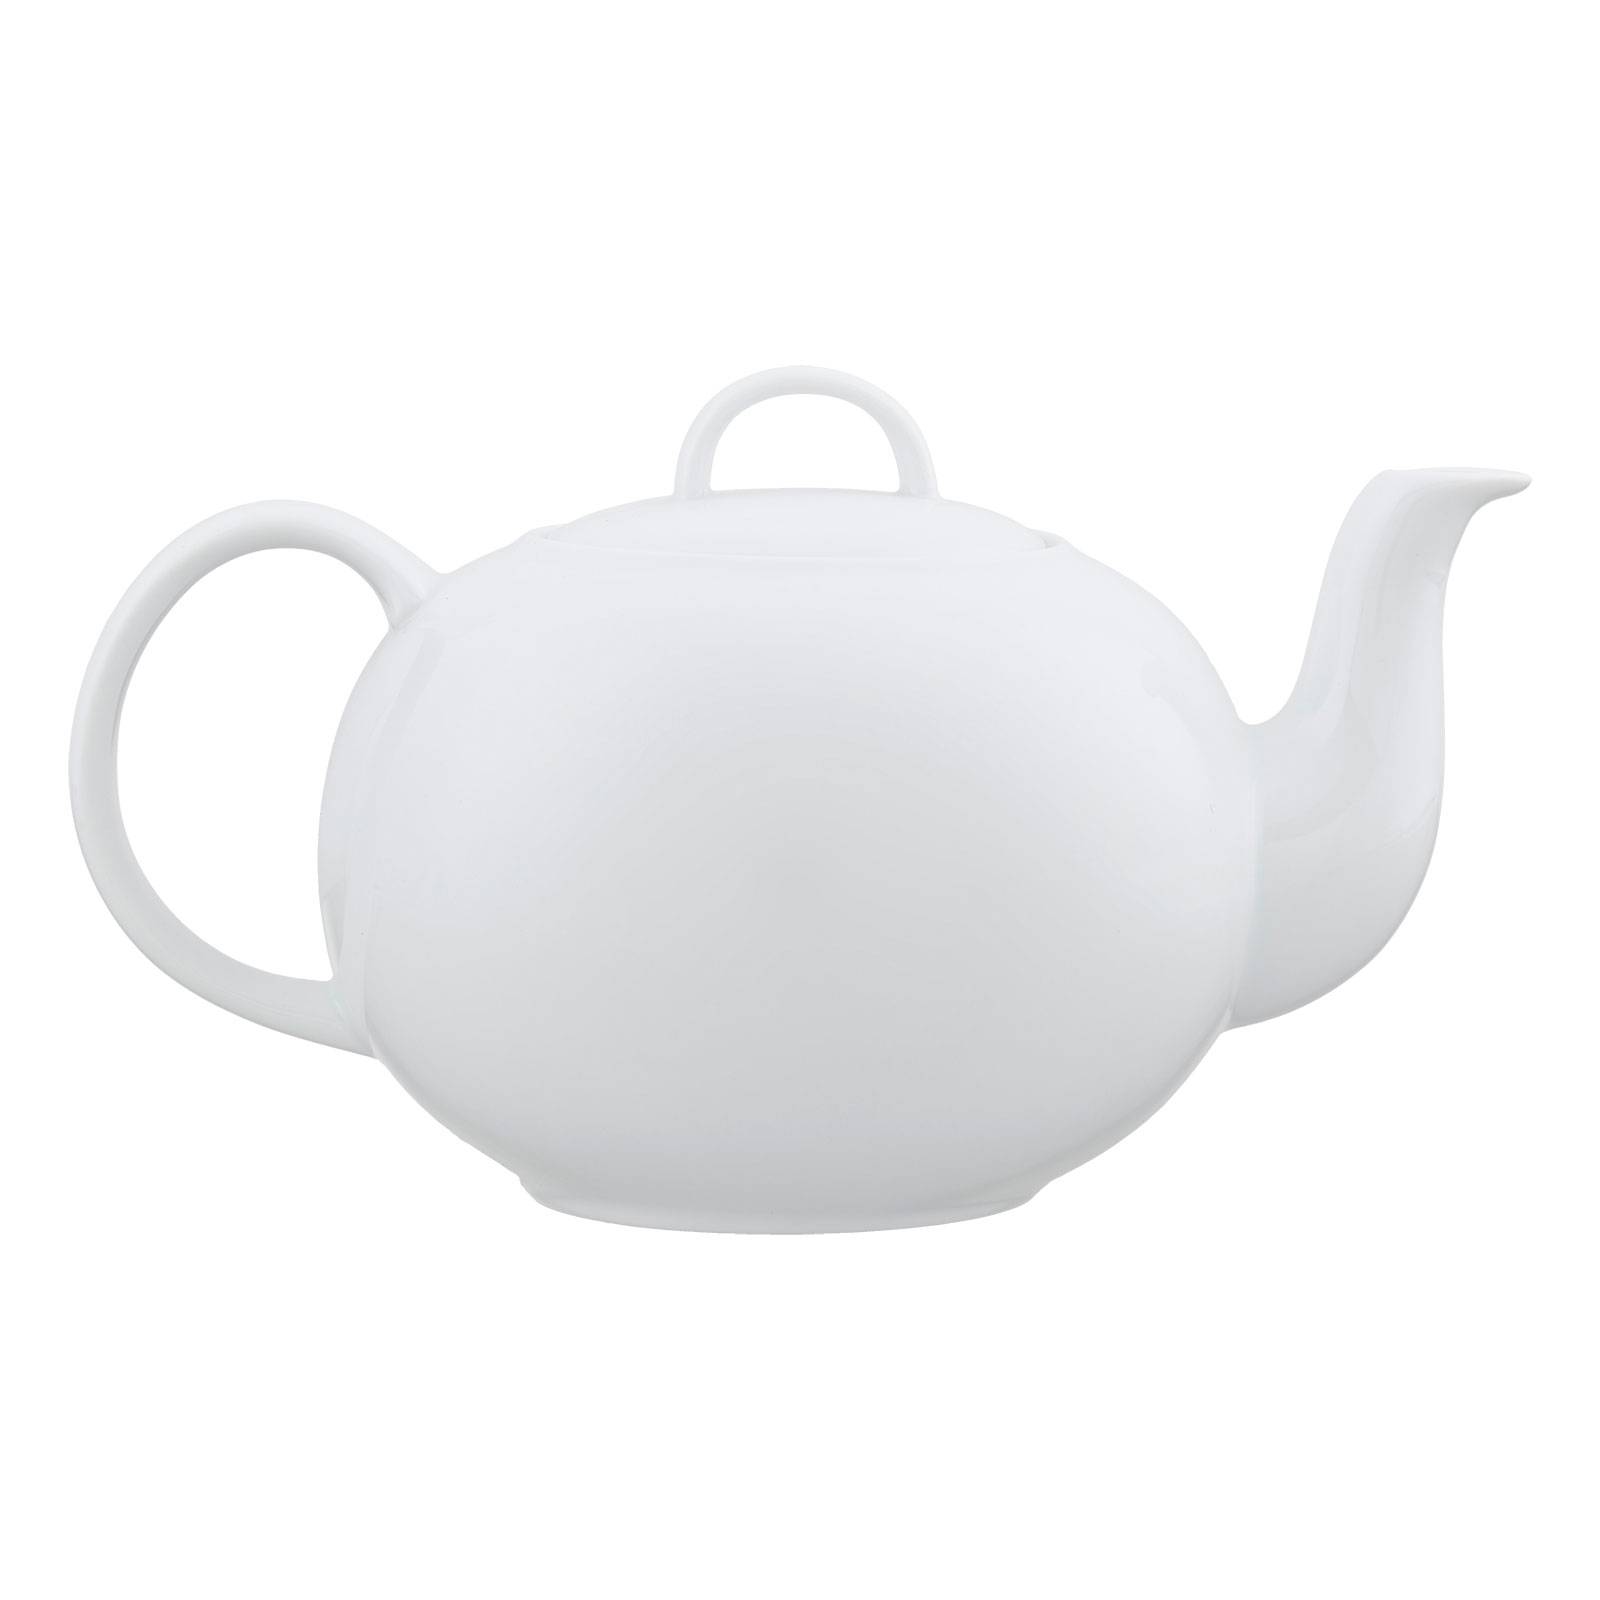 Teekanne Porzellan Weiß 1,2 l